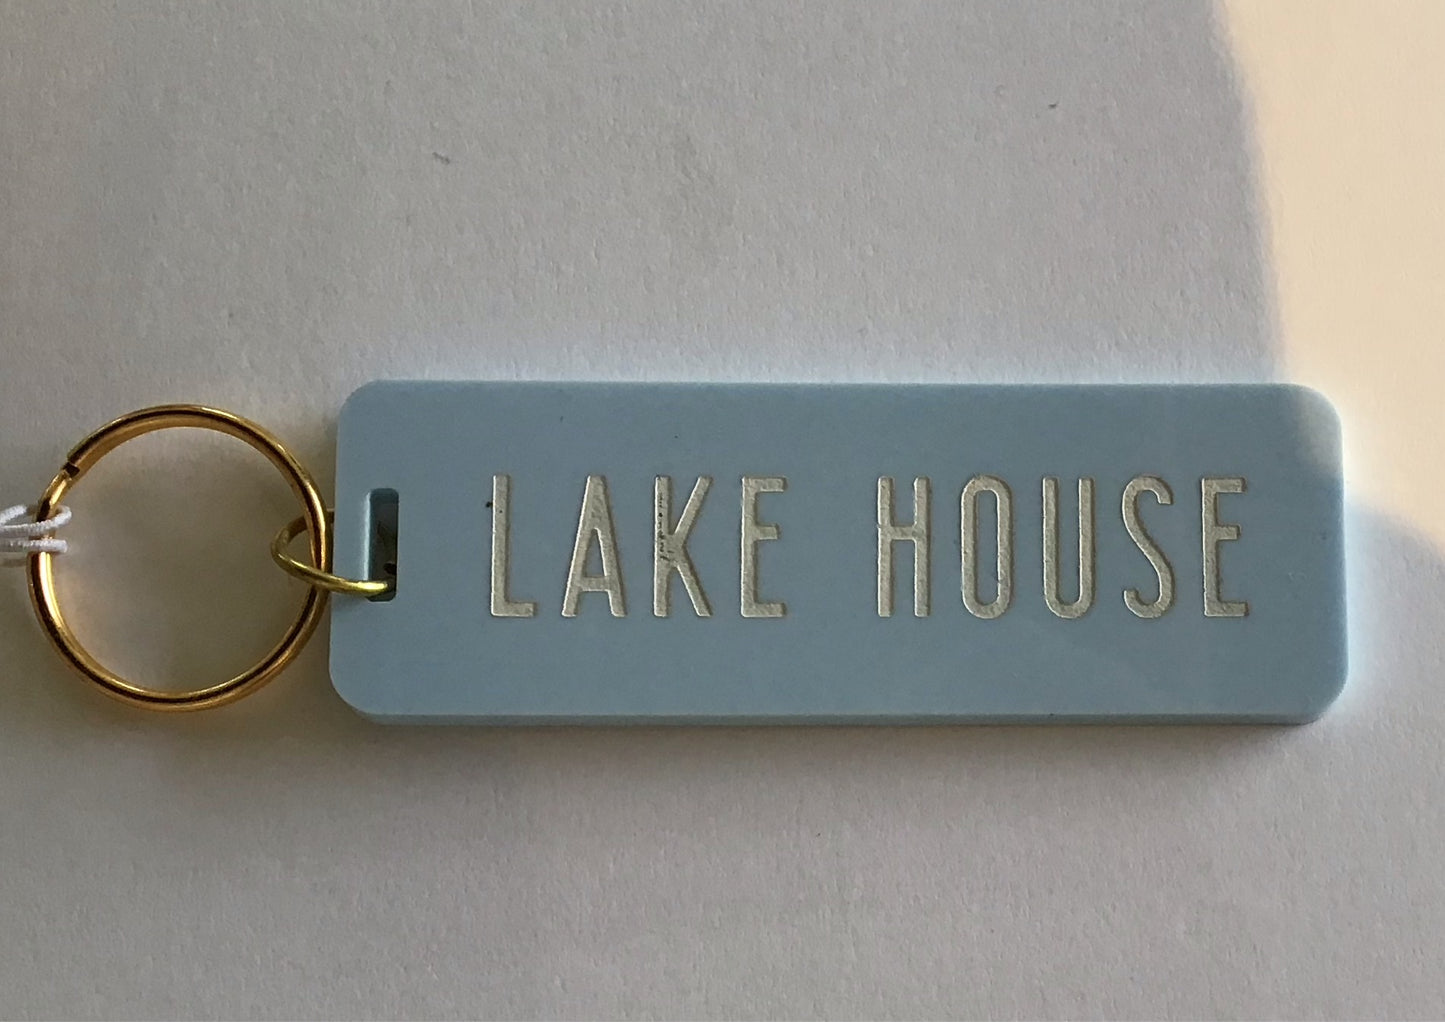 Lake house keychain